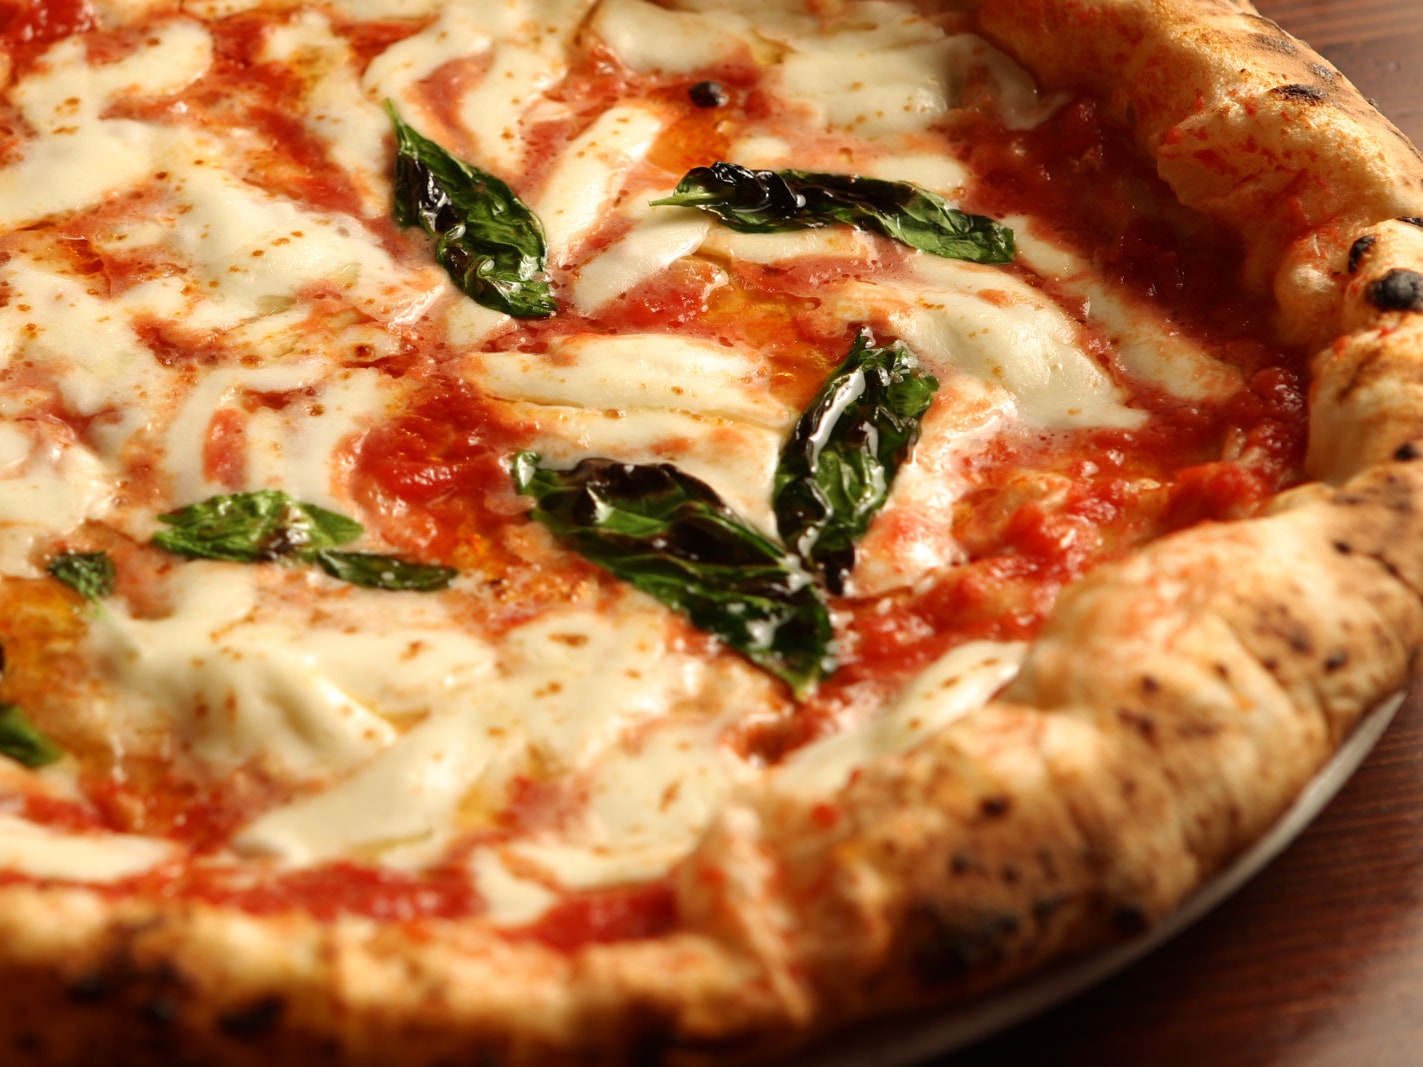 The traditional Neapolitan pizza